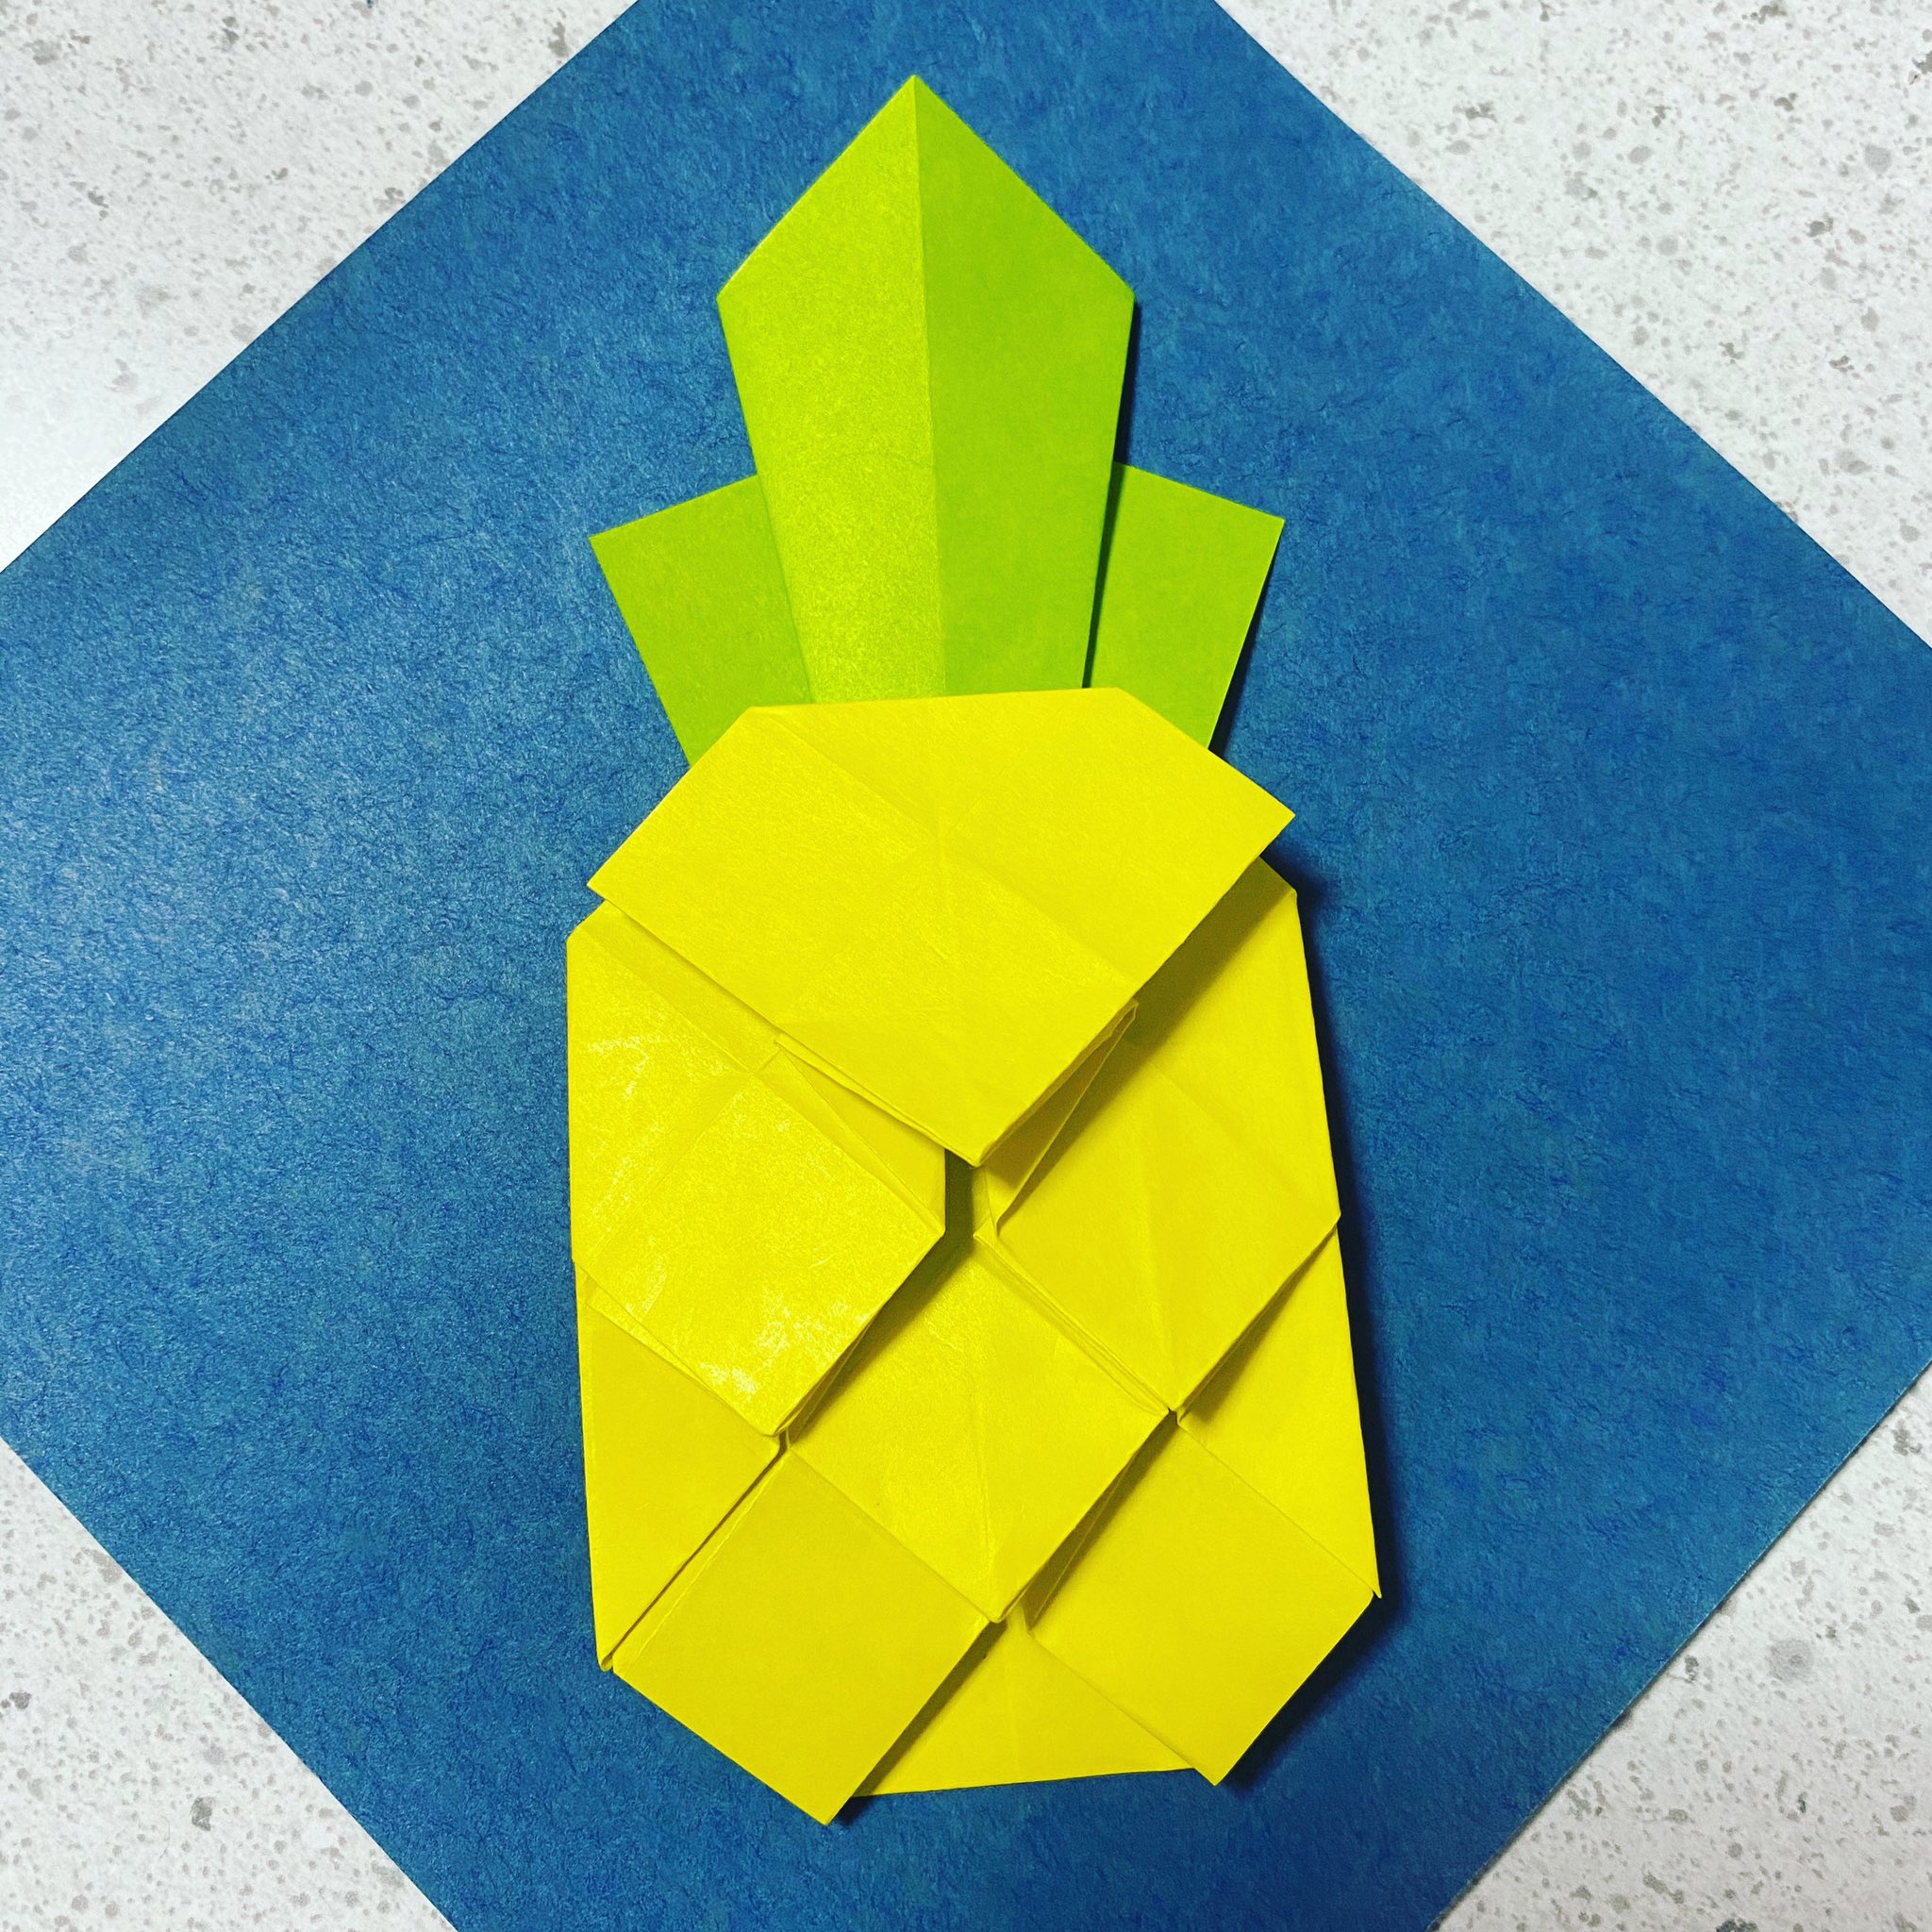 Yoko 240 367 Pineapple Designed By Me パイナップル 拙作 8月はパイン消費拡大月間なんだって 365origamichallenge Origami 折り紙作品